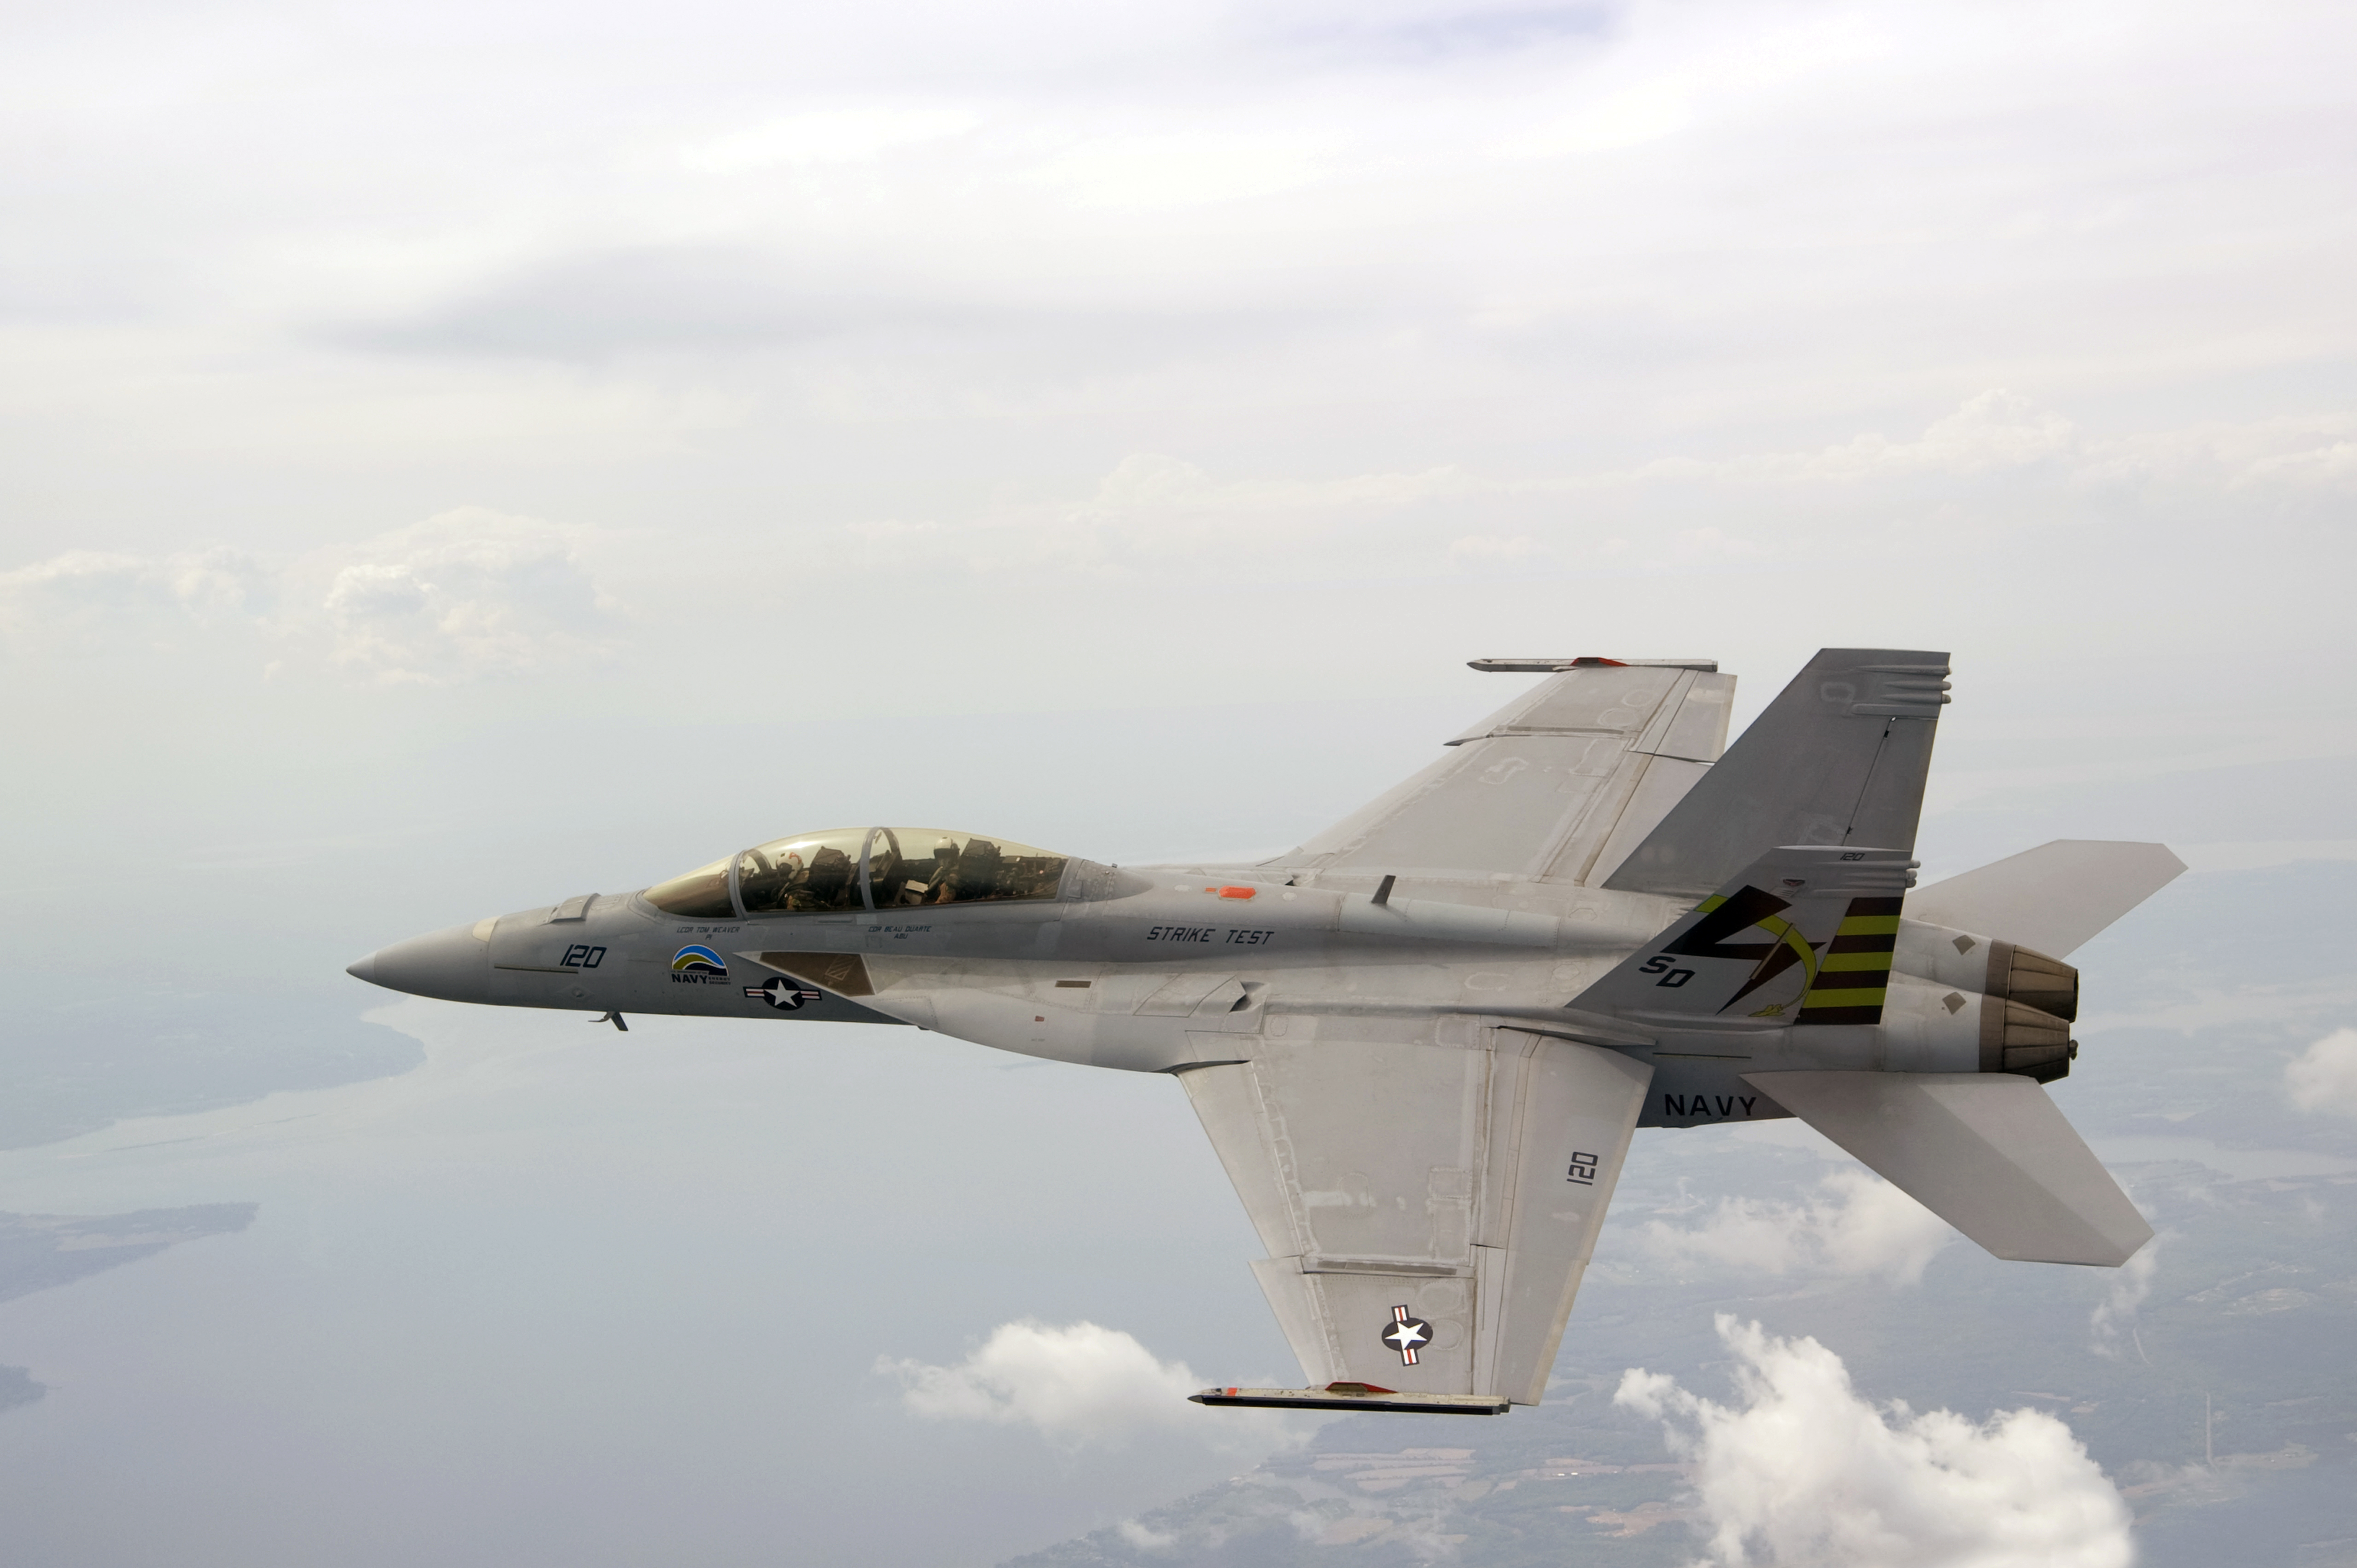 F/A-18F Super Hornet strike fighter, dubbed the "Green Hornet" by Liz Goettee